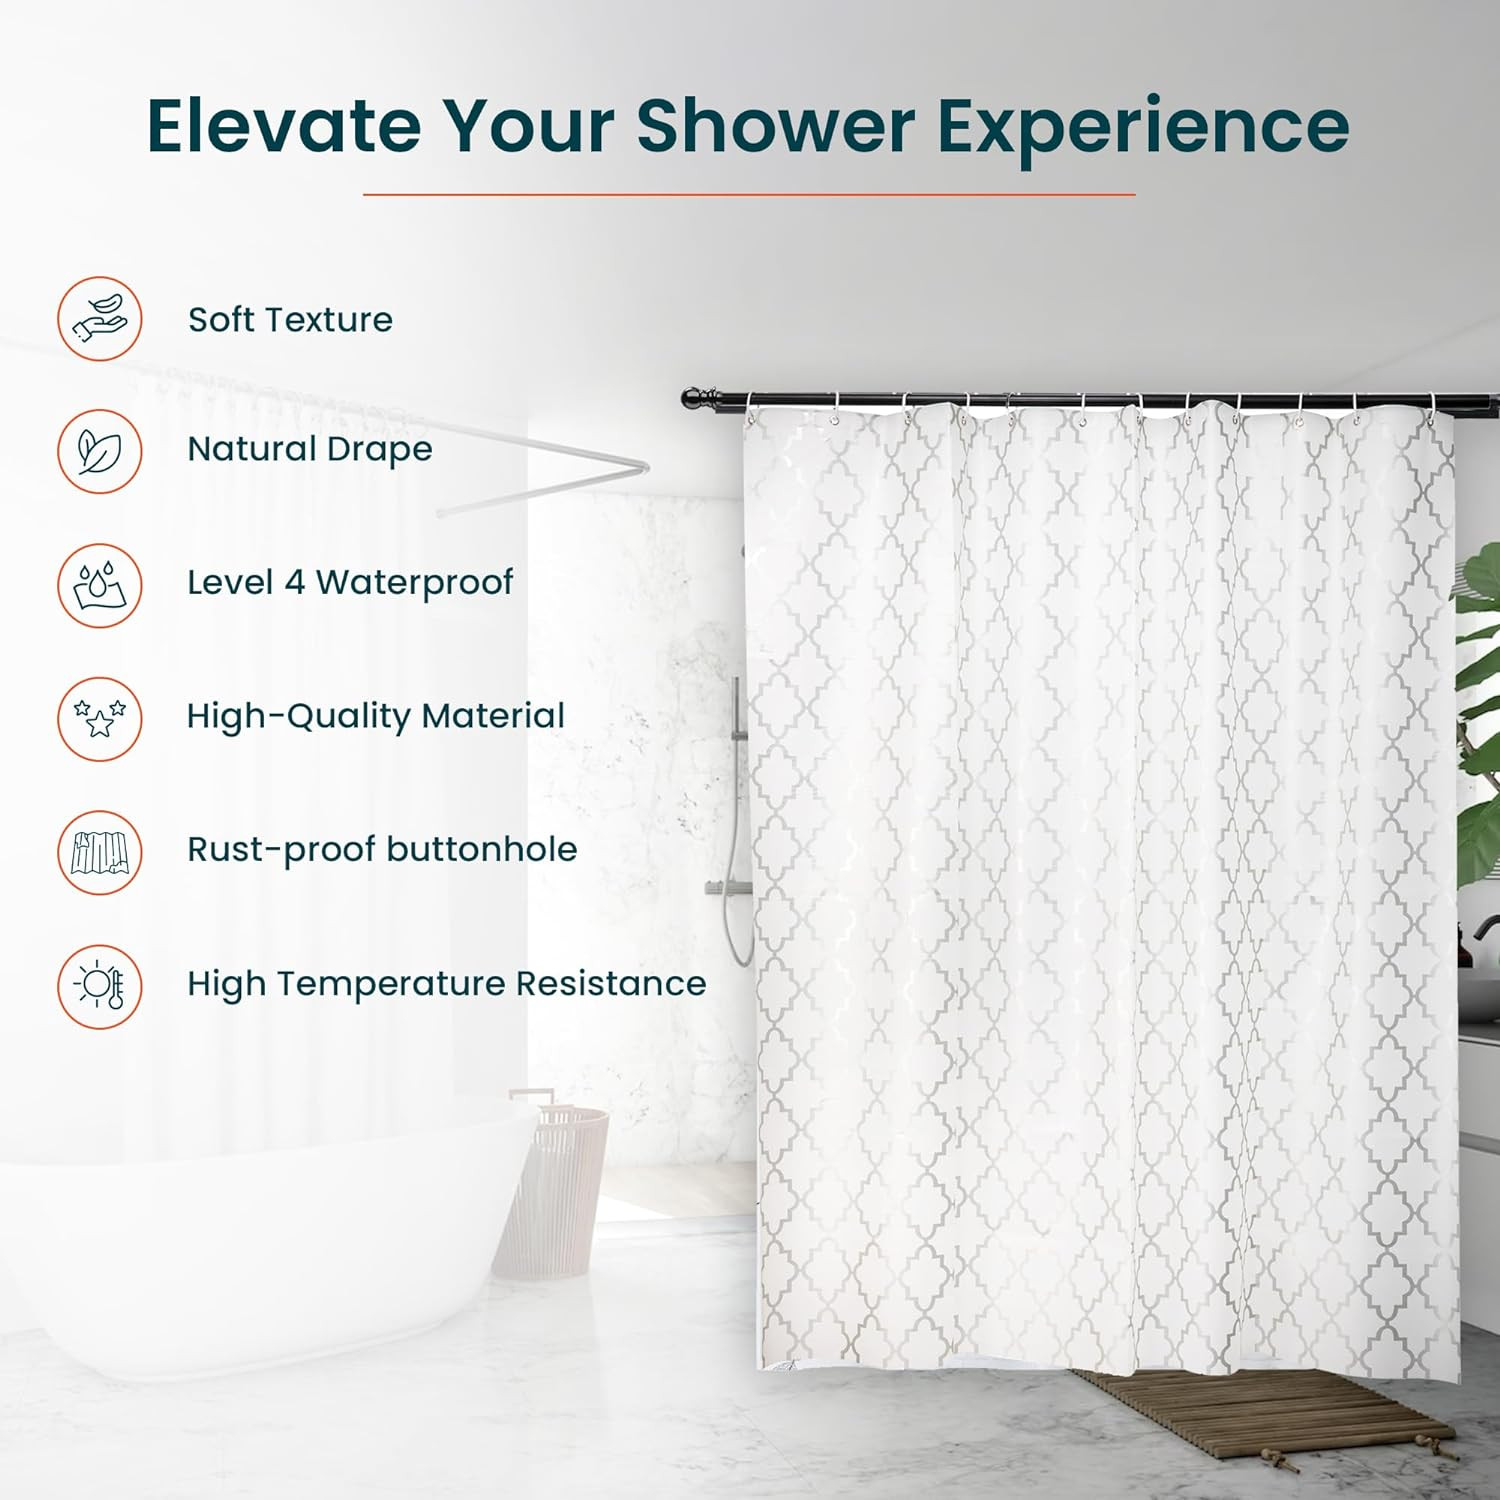 Kuber IndustriesSoft Texture Bath curtain|Natural Drape Waterproof Shower Curtain 6 Feet|Silver